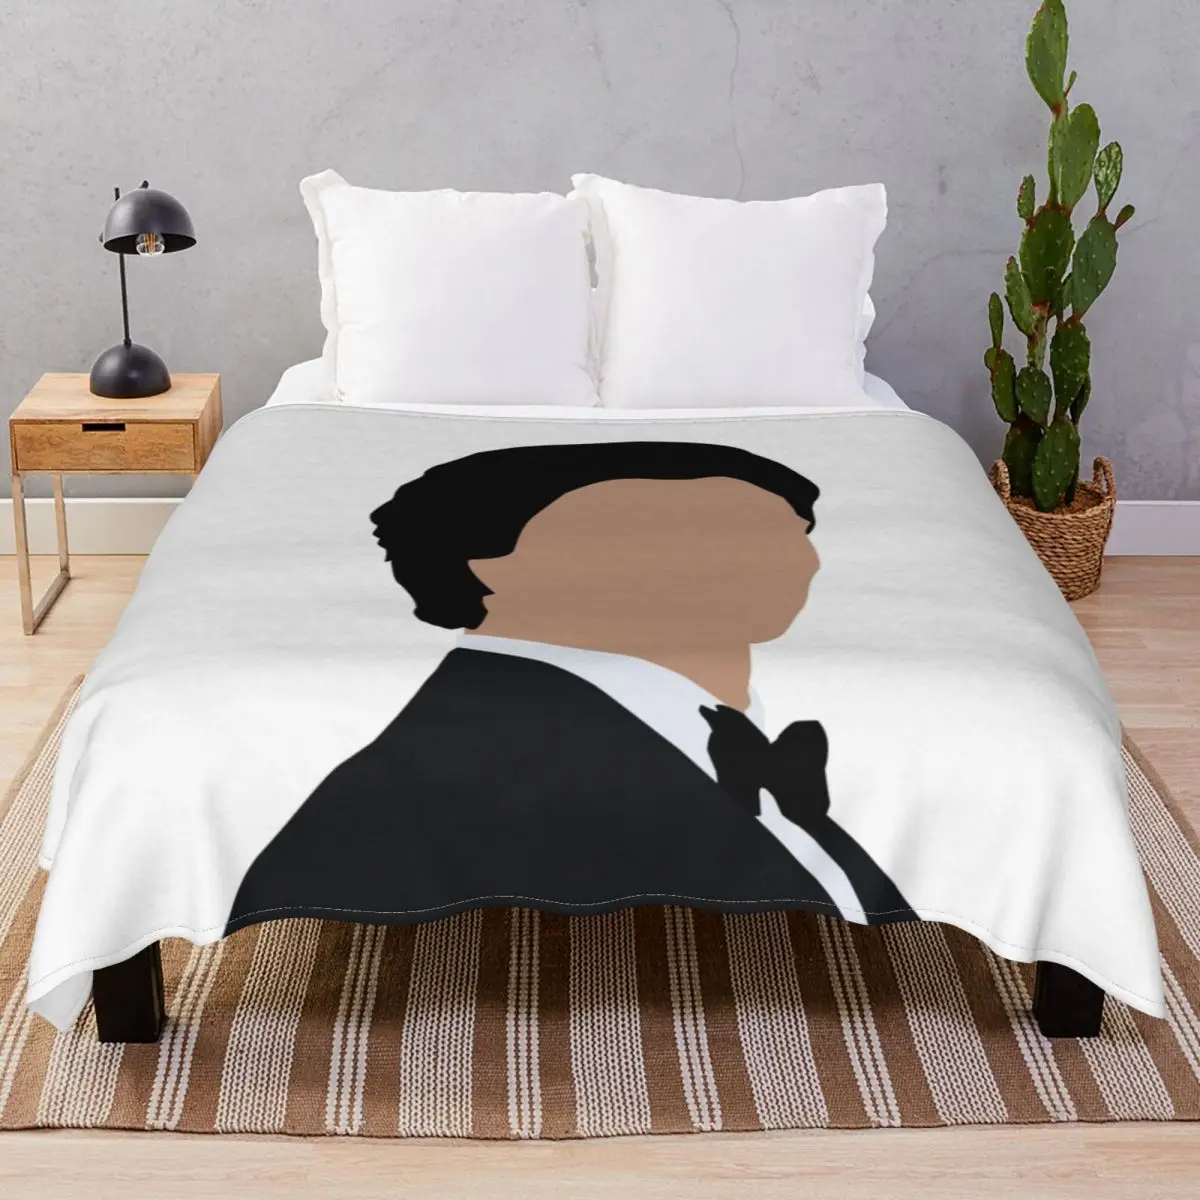 Damon Salvatore Blankets Fleece Spring/Autumn Ultra-Soft Throw Blanket for Bed Sofa Travel Office